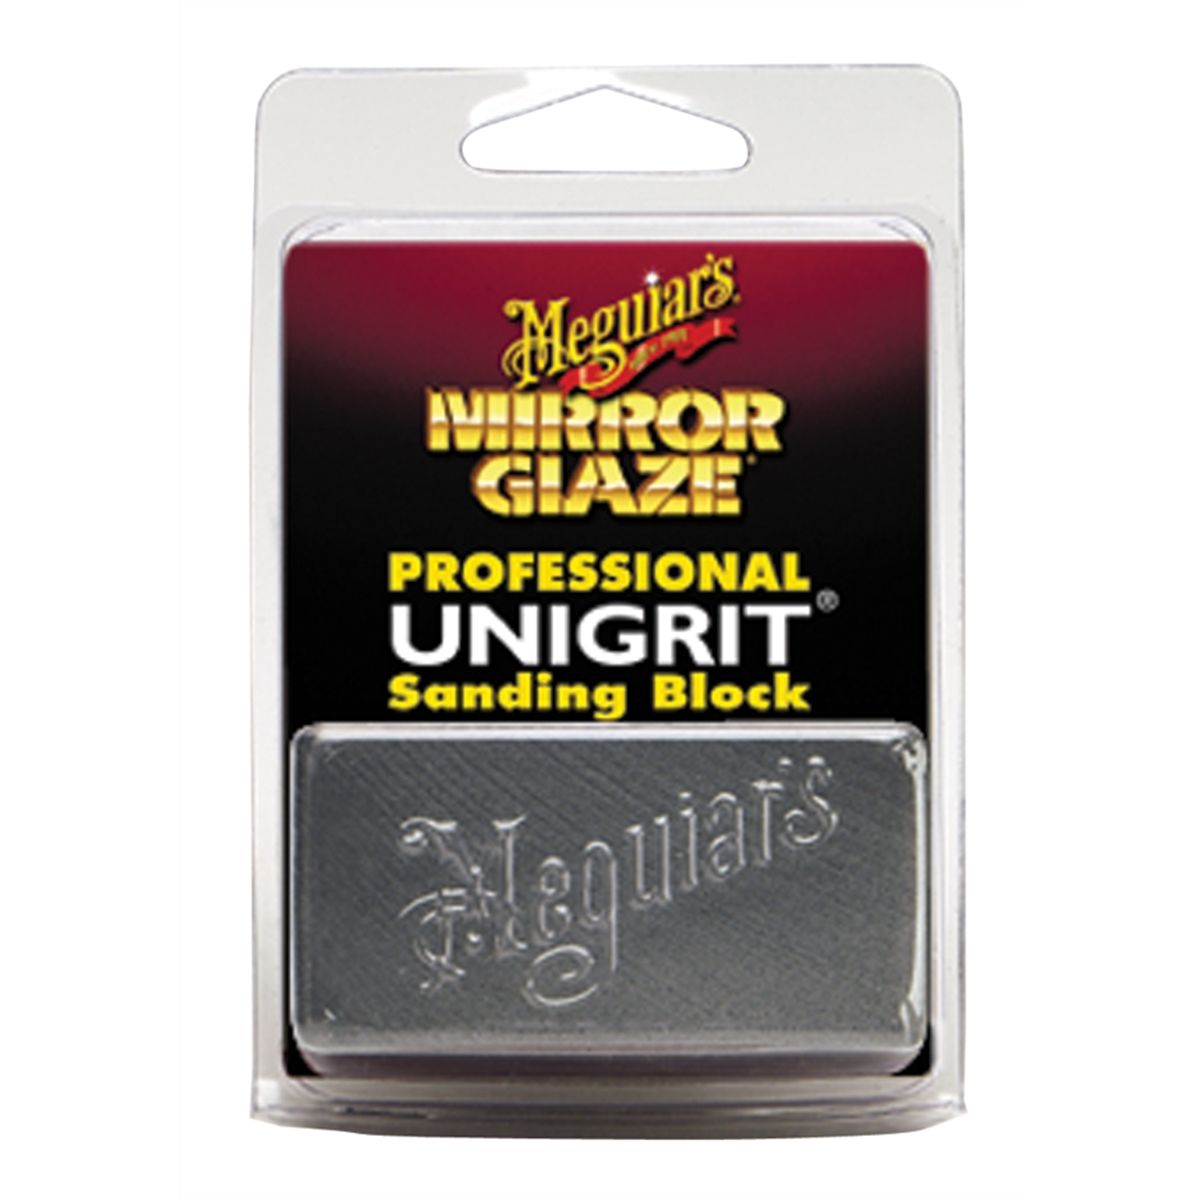 Unigrit(TM) Sanding Block - 1000 Grit